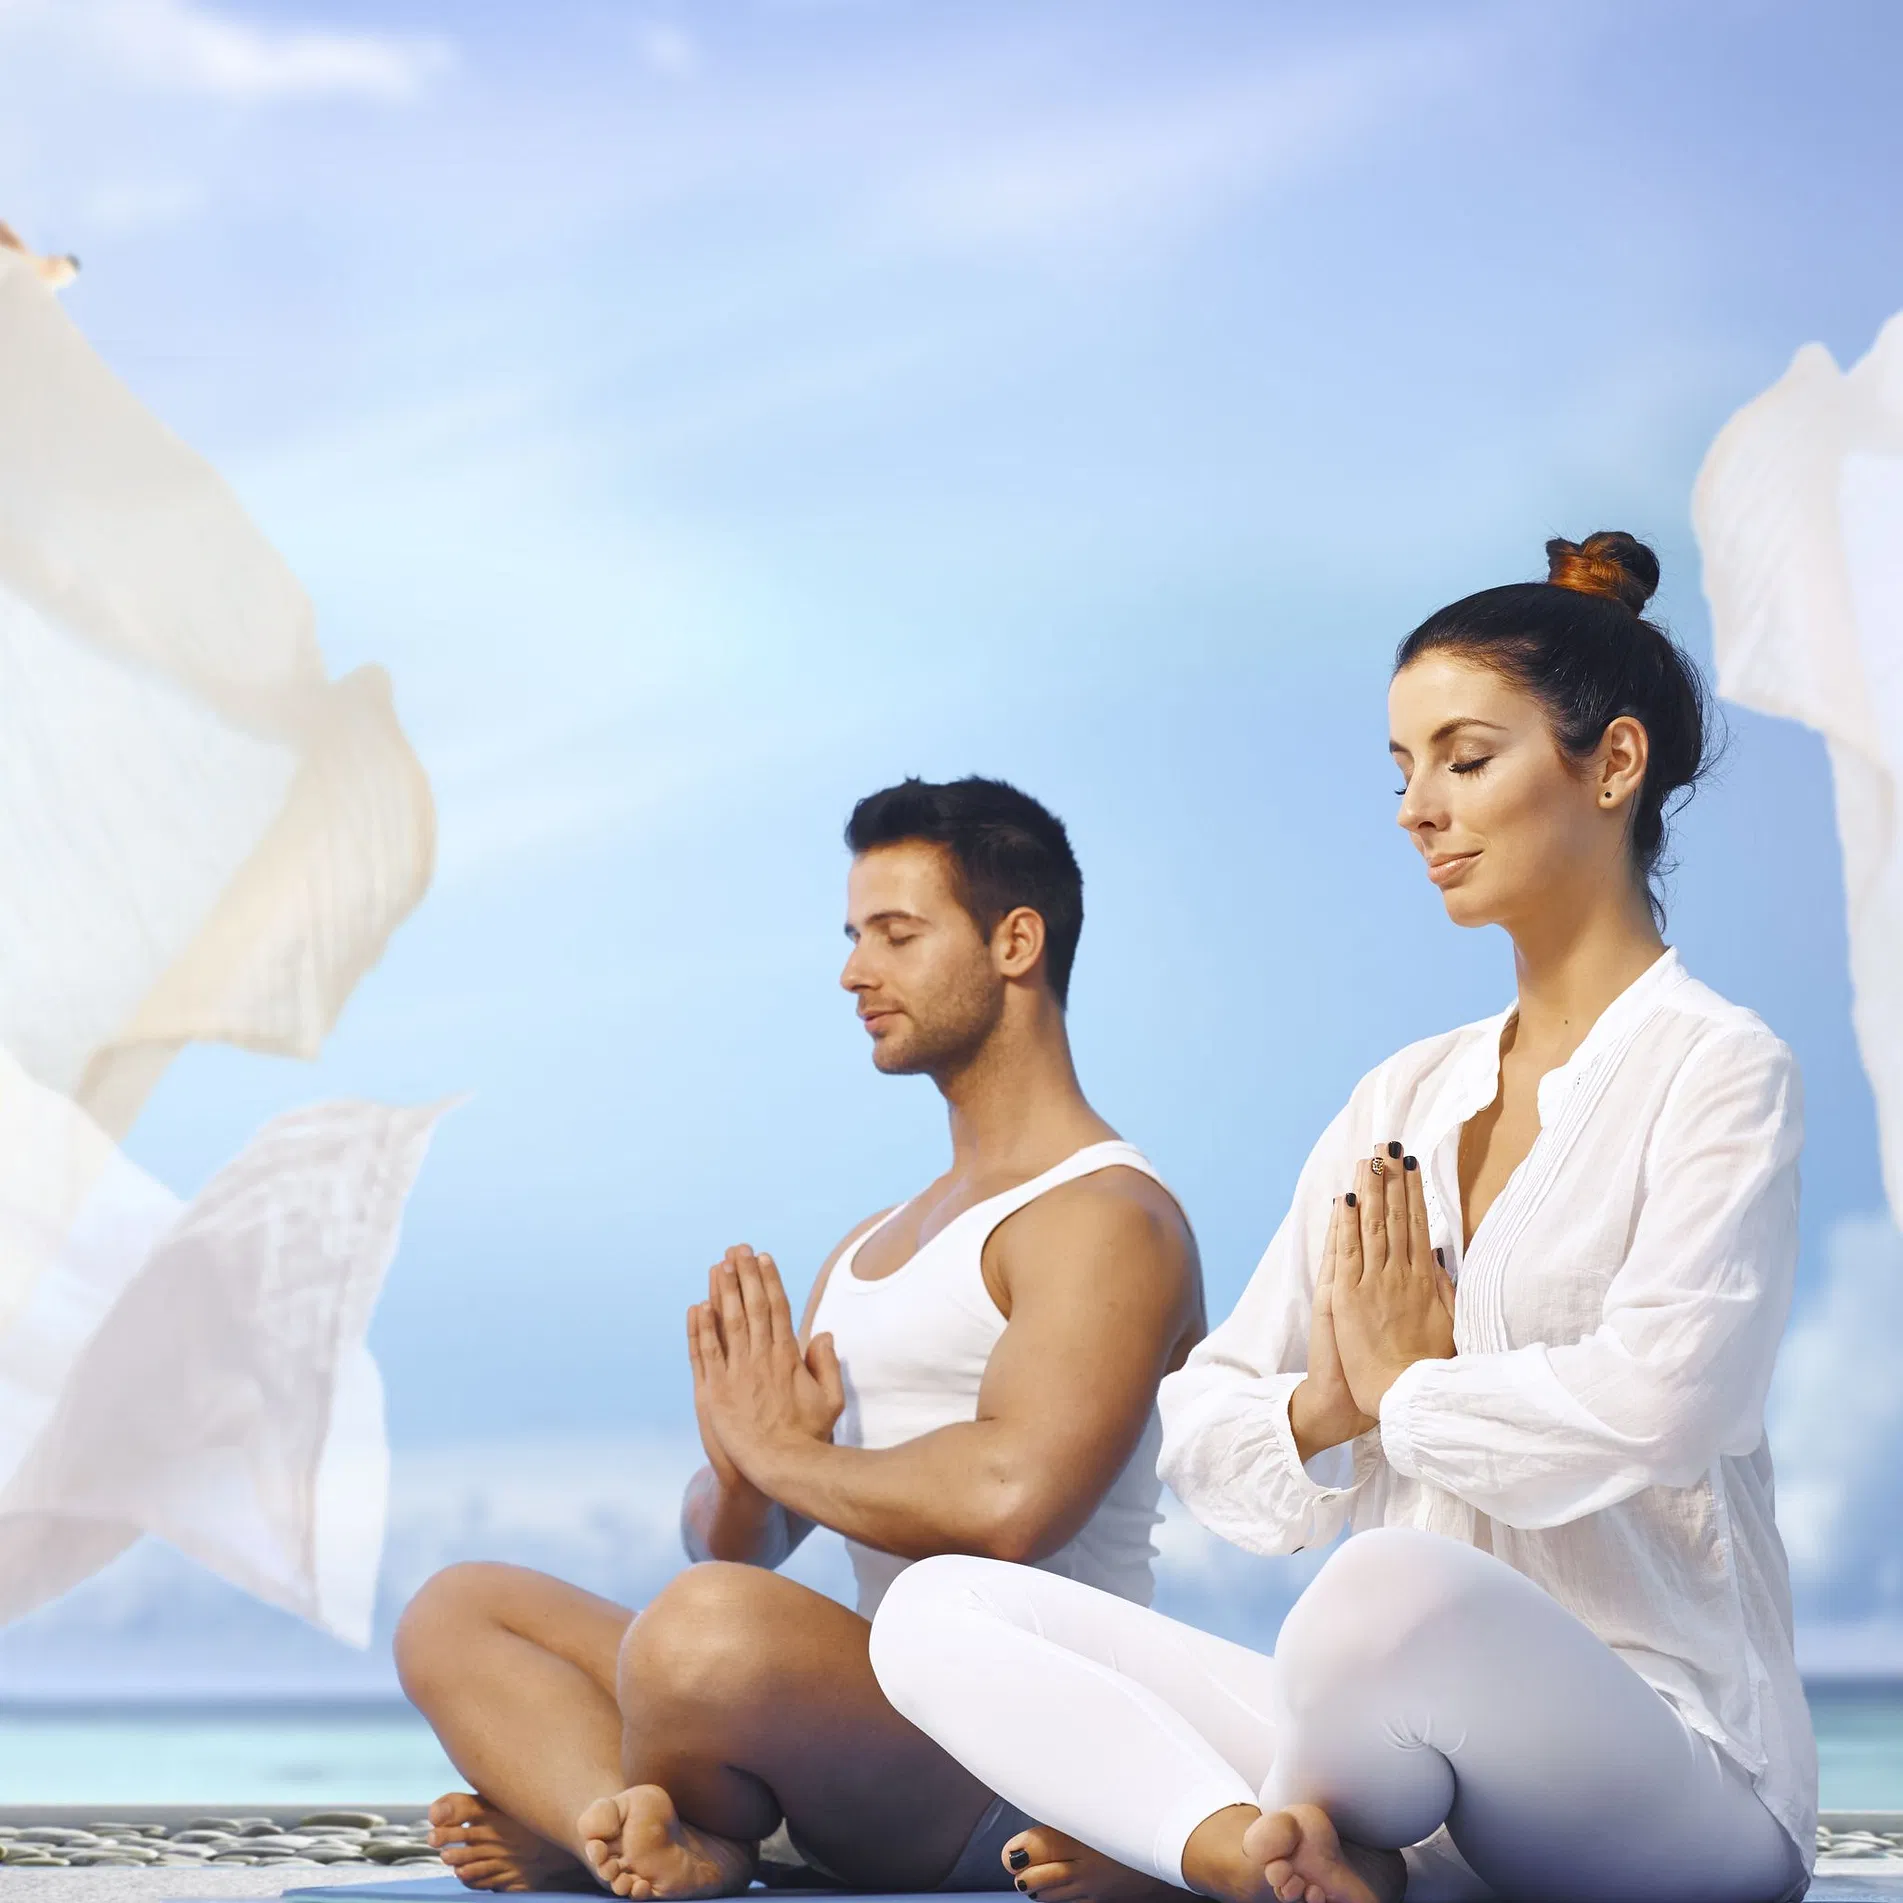 Relationships Get Better With Meditation